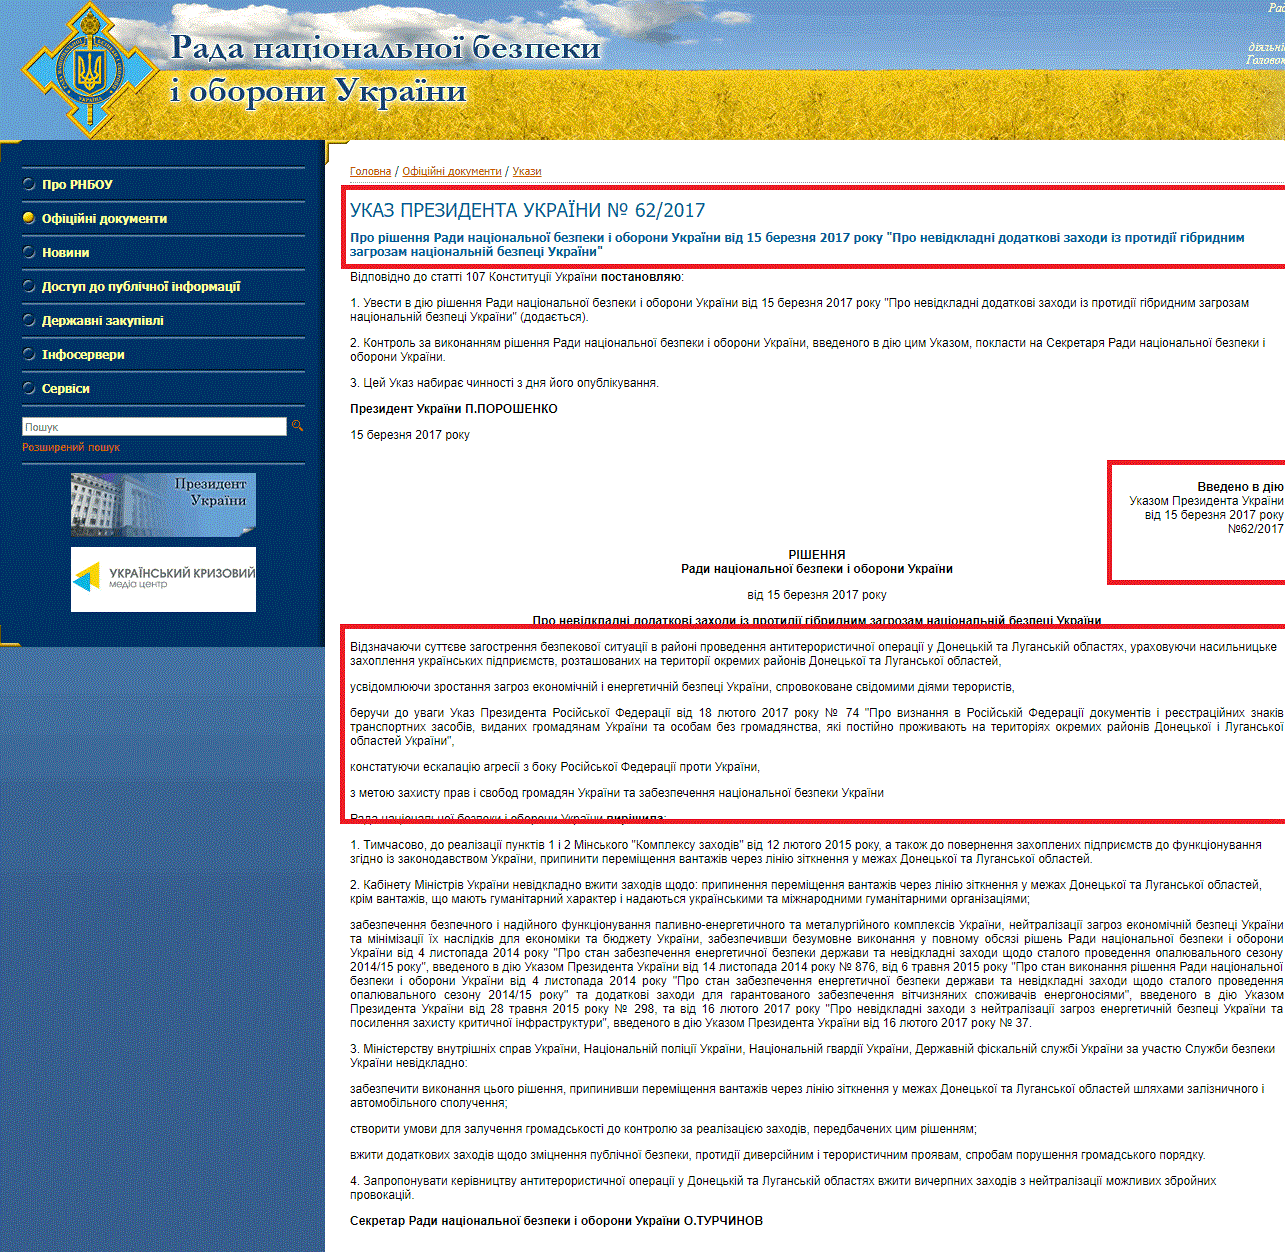 http://www.rnbo.gov.ua/documents/441.html